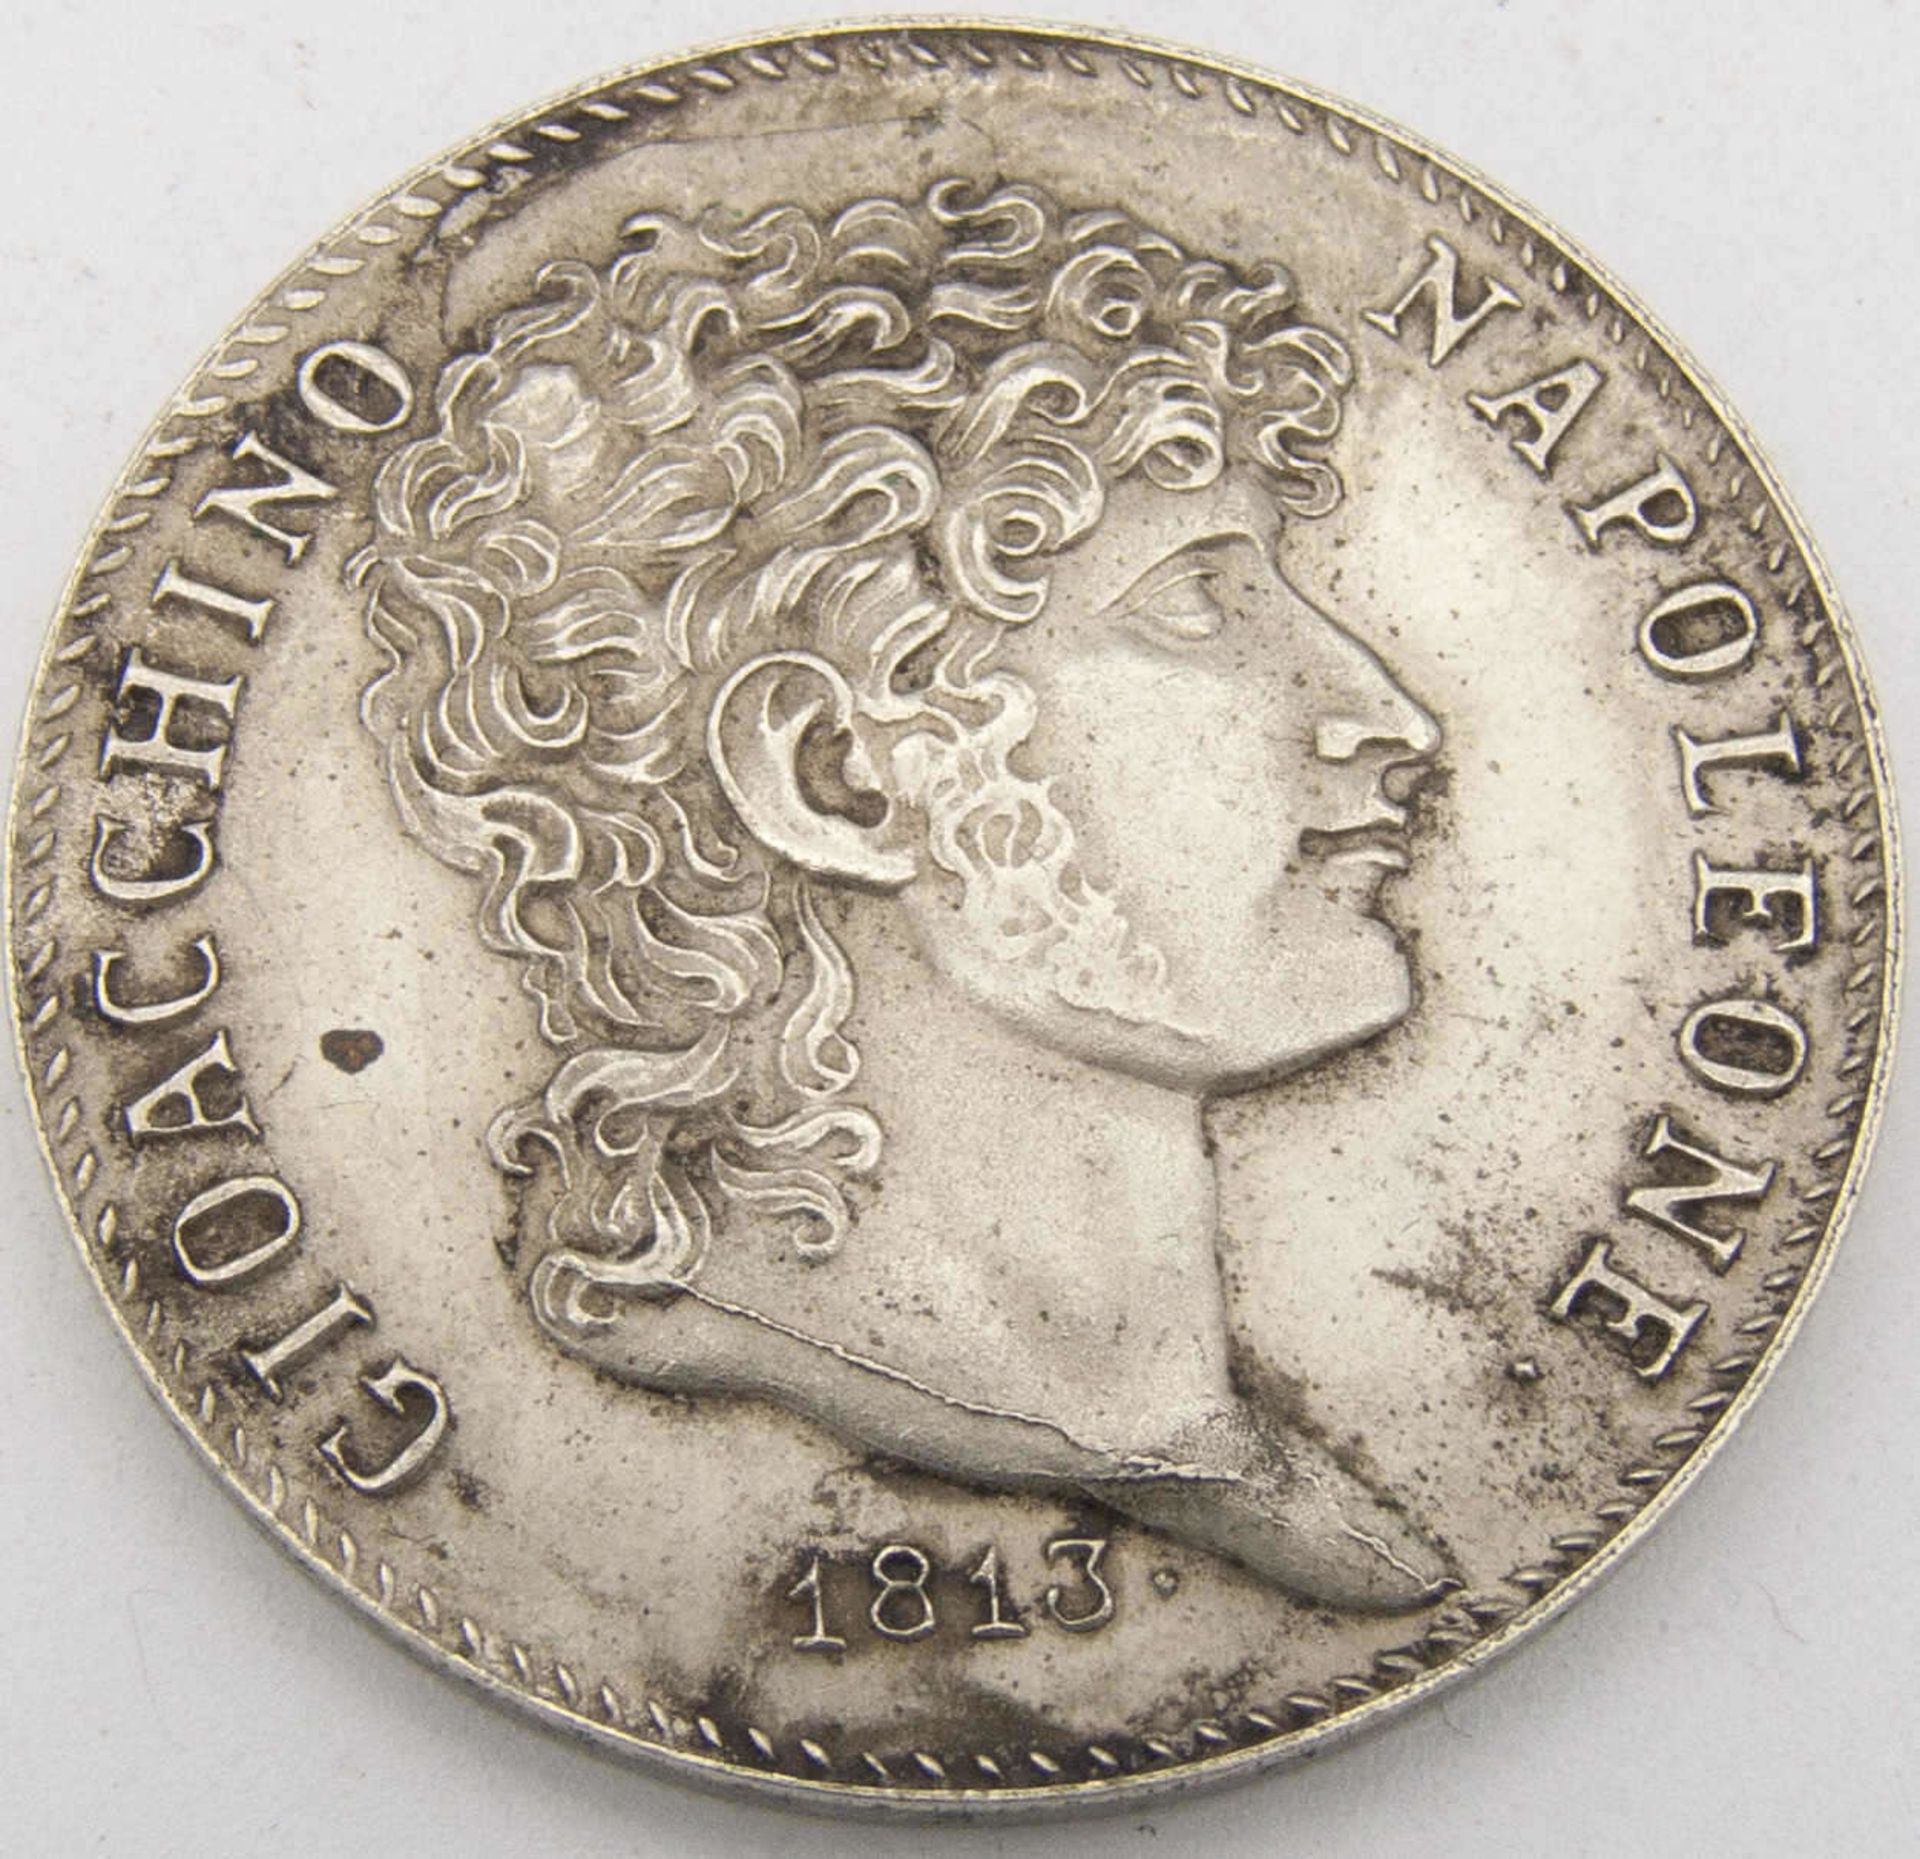 Italien - Königreich Neapel/Sizilien 1813, 5 Lire - Silbermünze Joachim Murat. Durchmesser: ca. 37